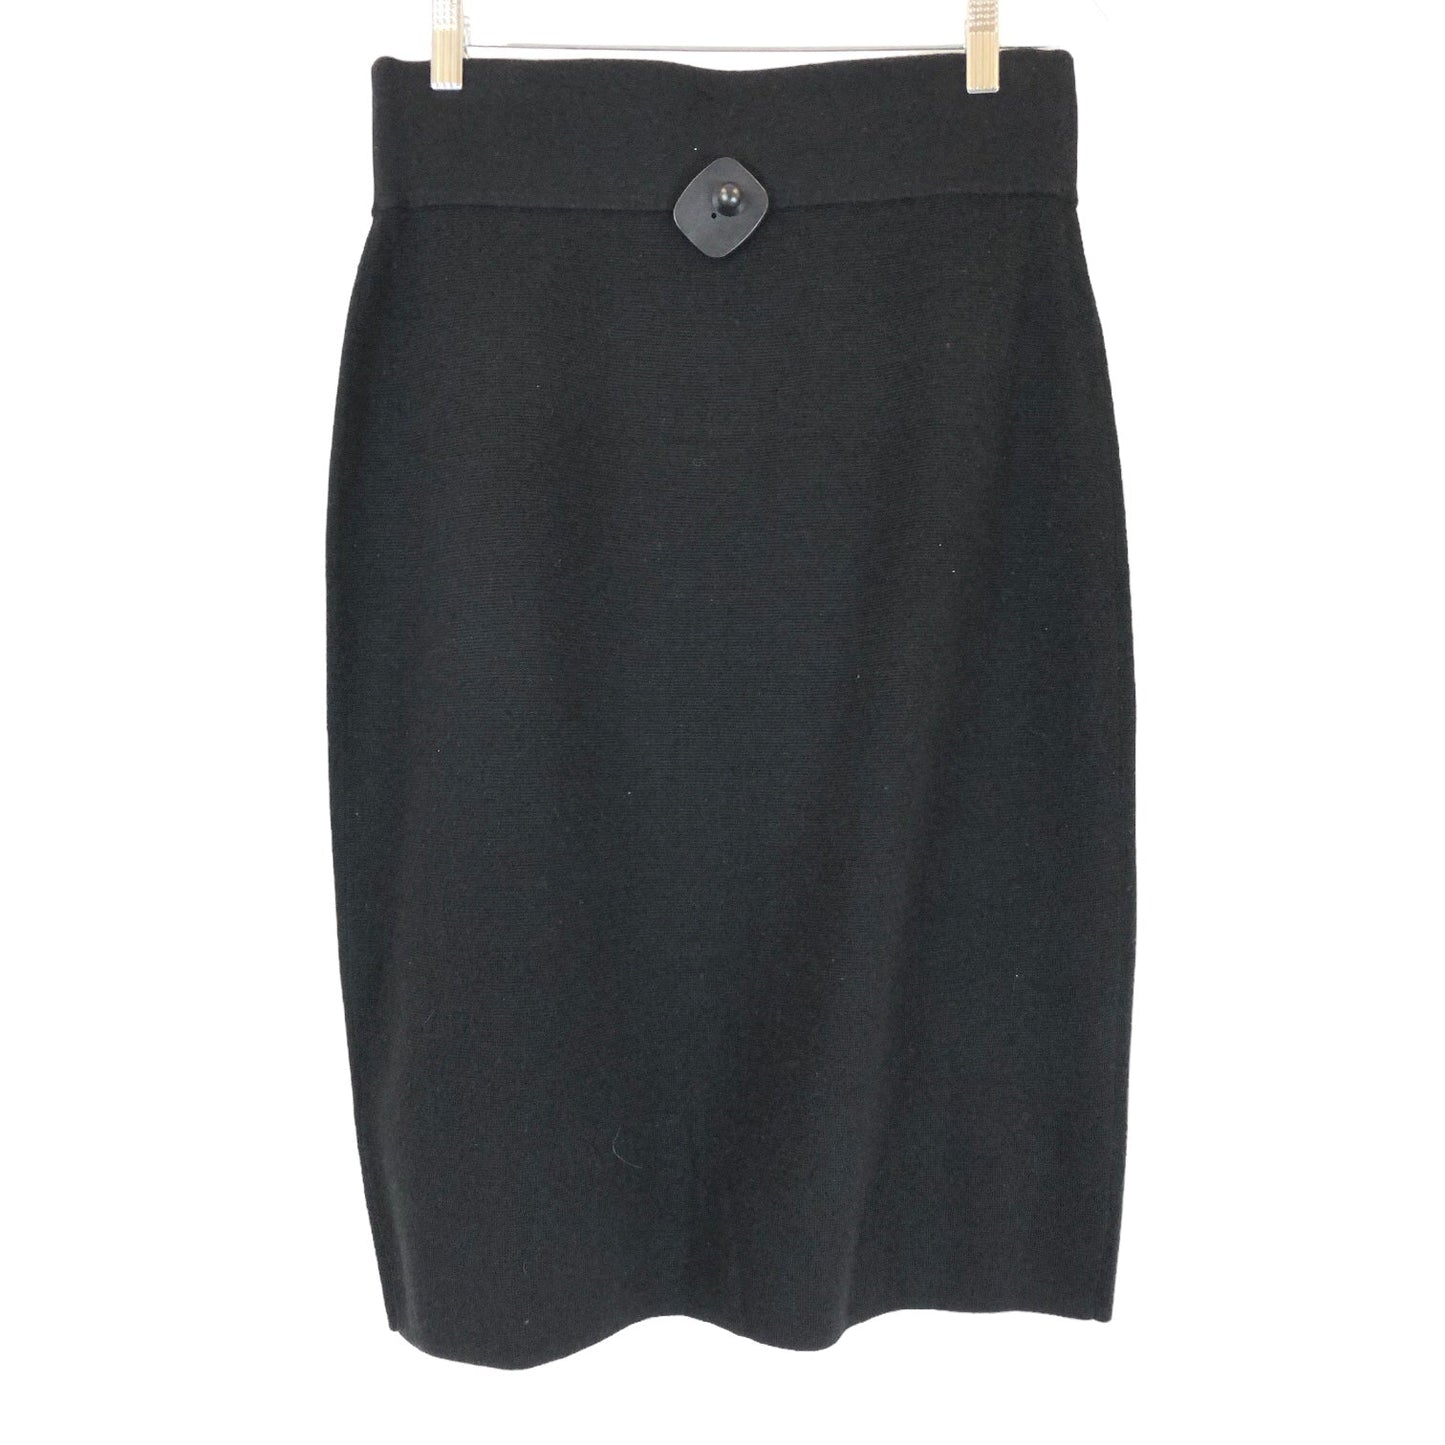 Skirt Midi By Club Monaco  Size: M